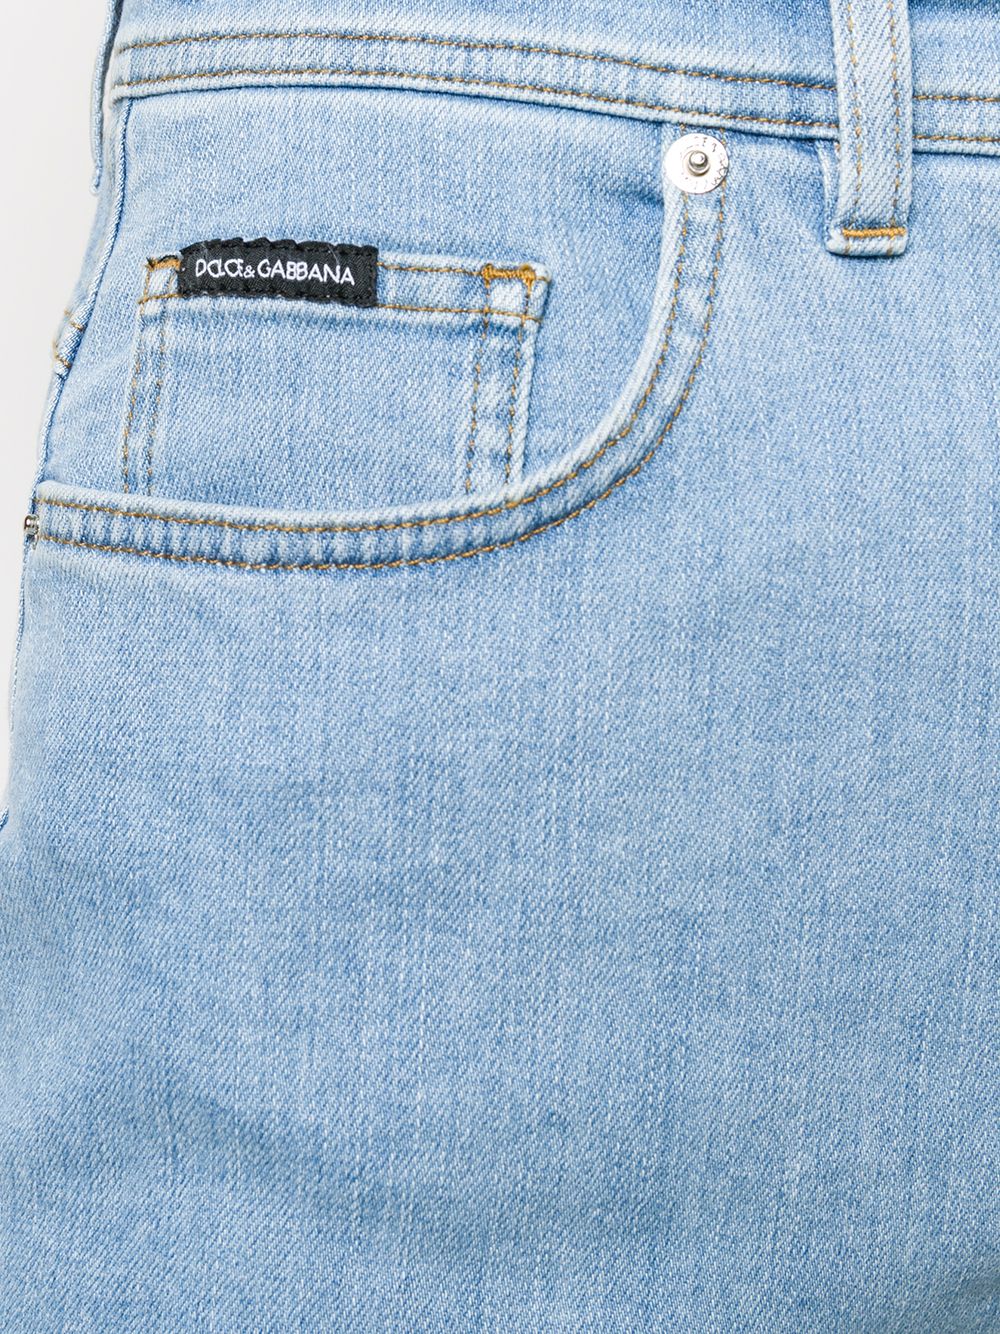 фото Dolce & gabbana джинсовая юбка мини